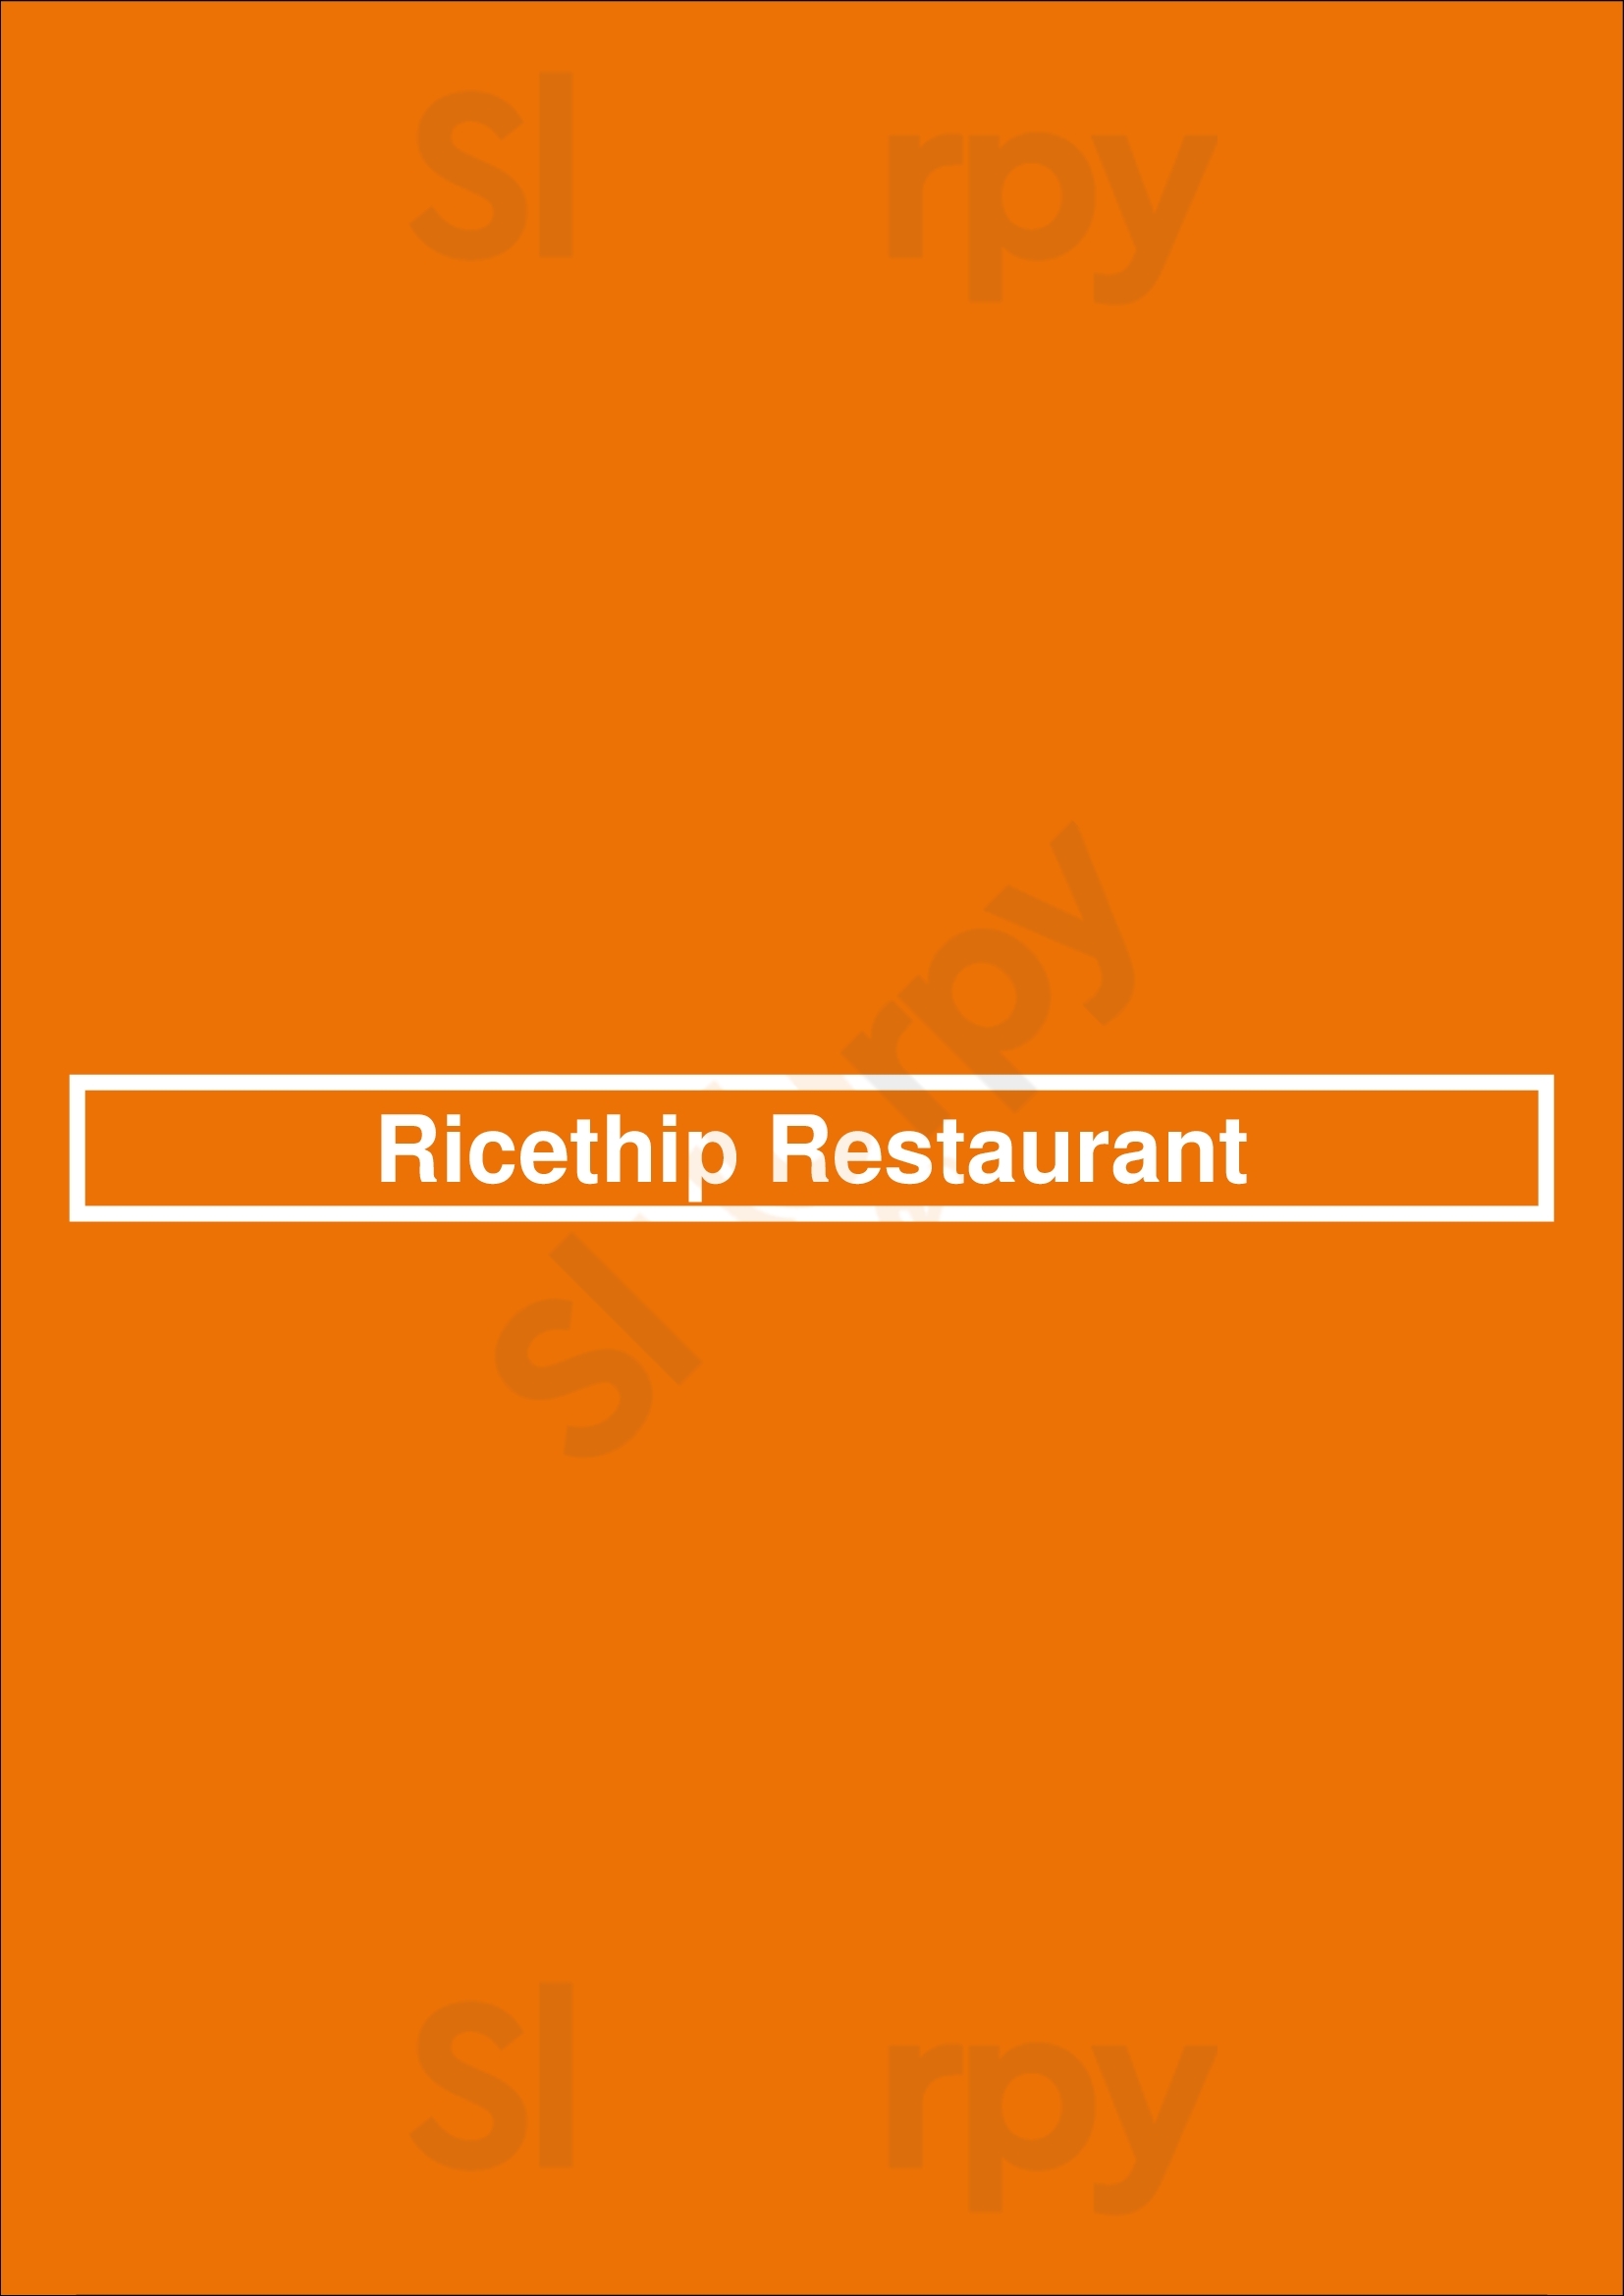 Ricethip Restaurant Leeds Menu - 1